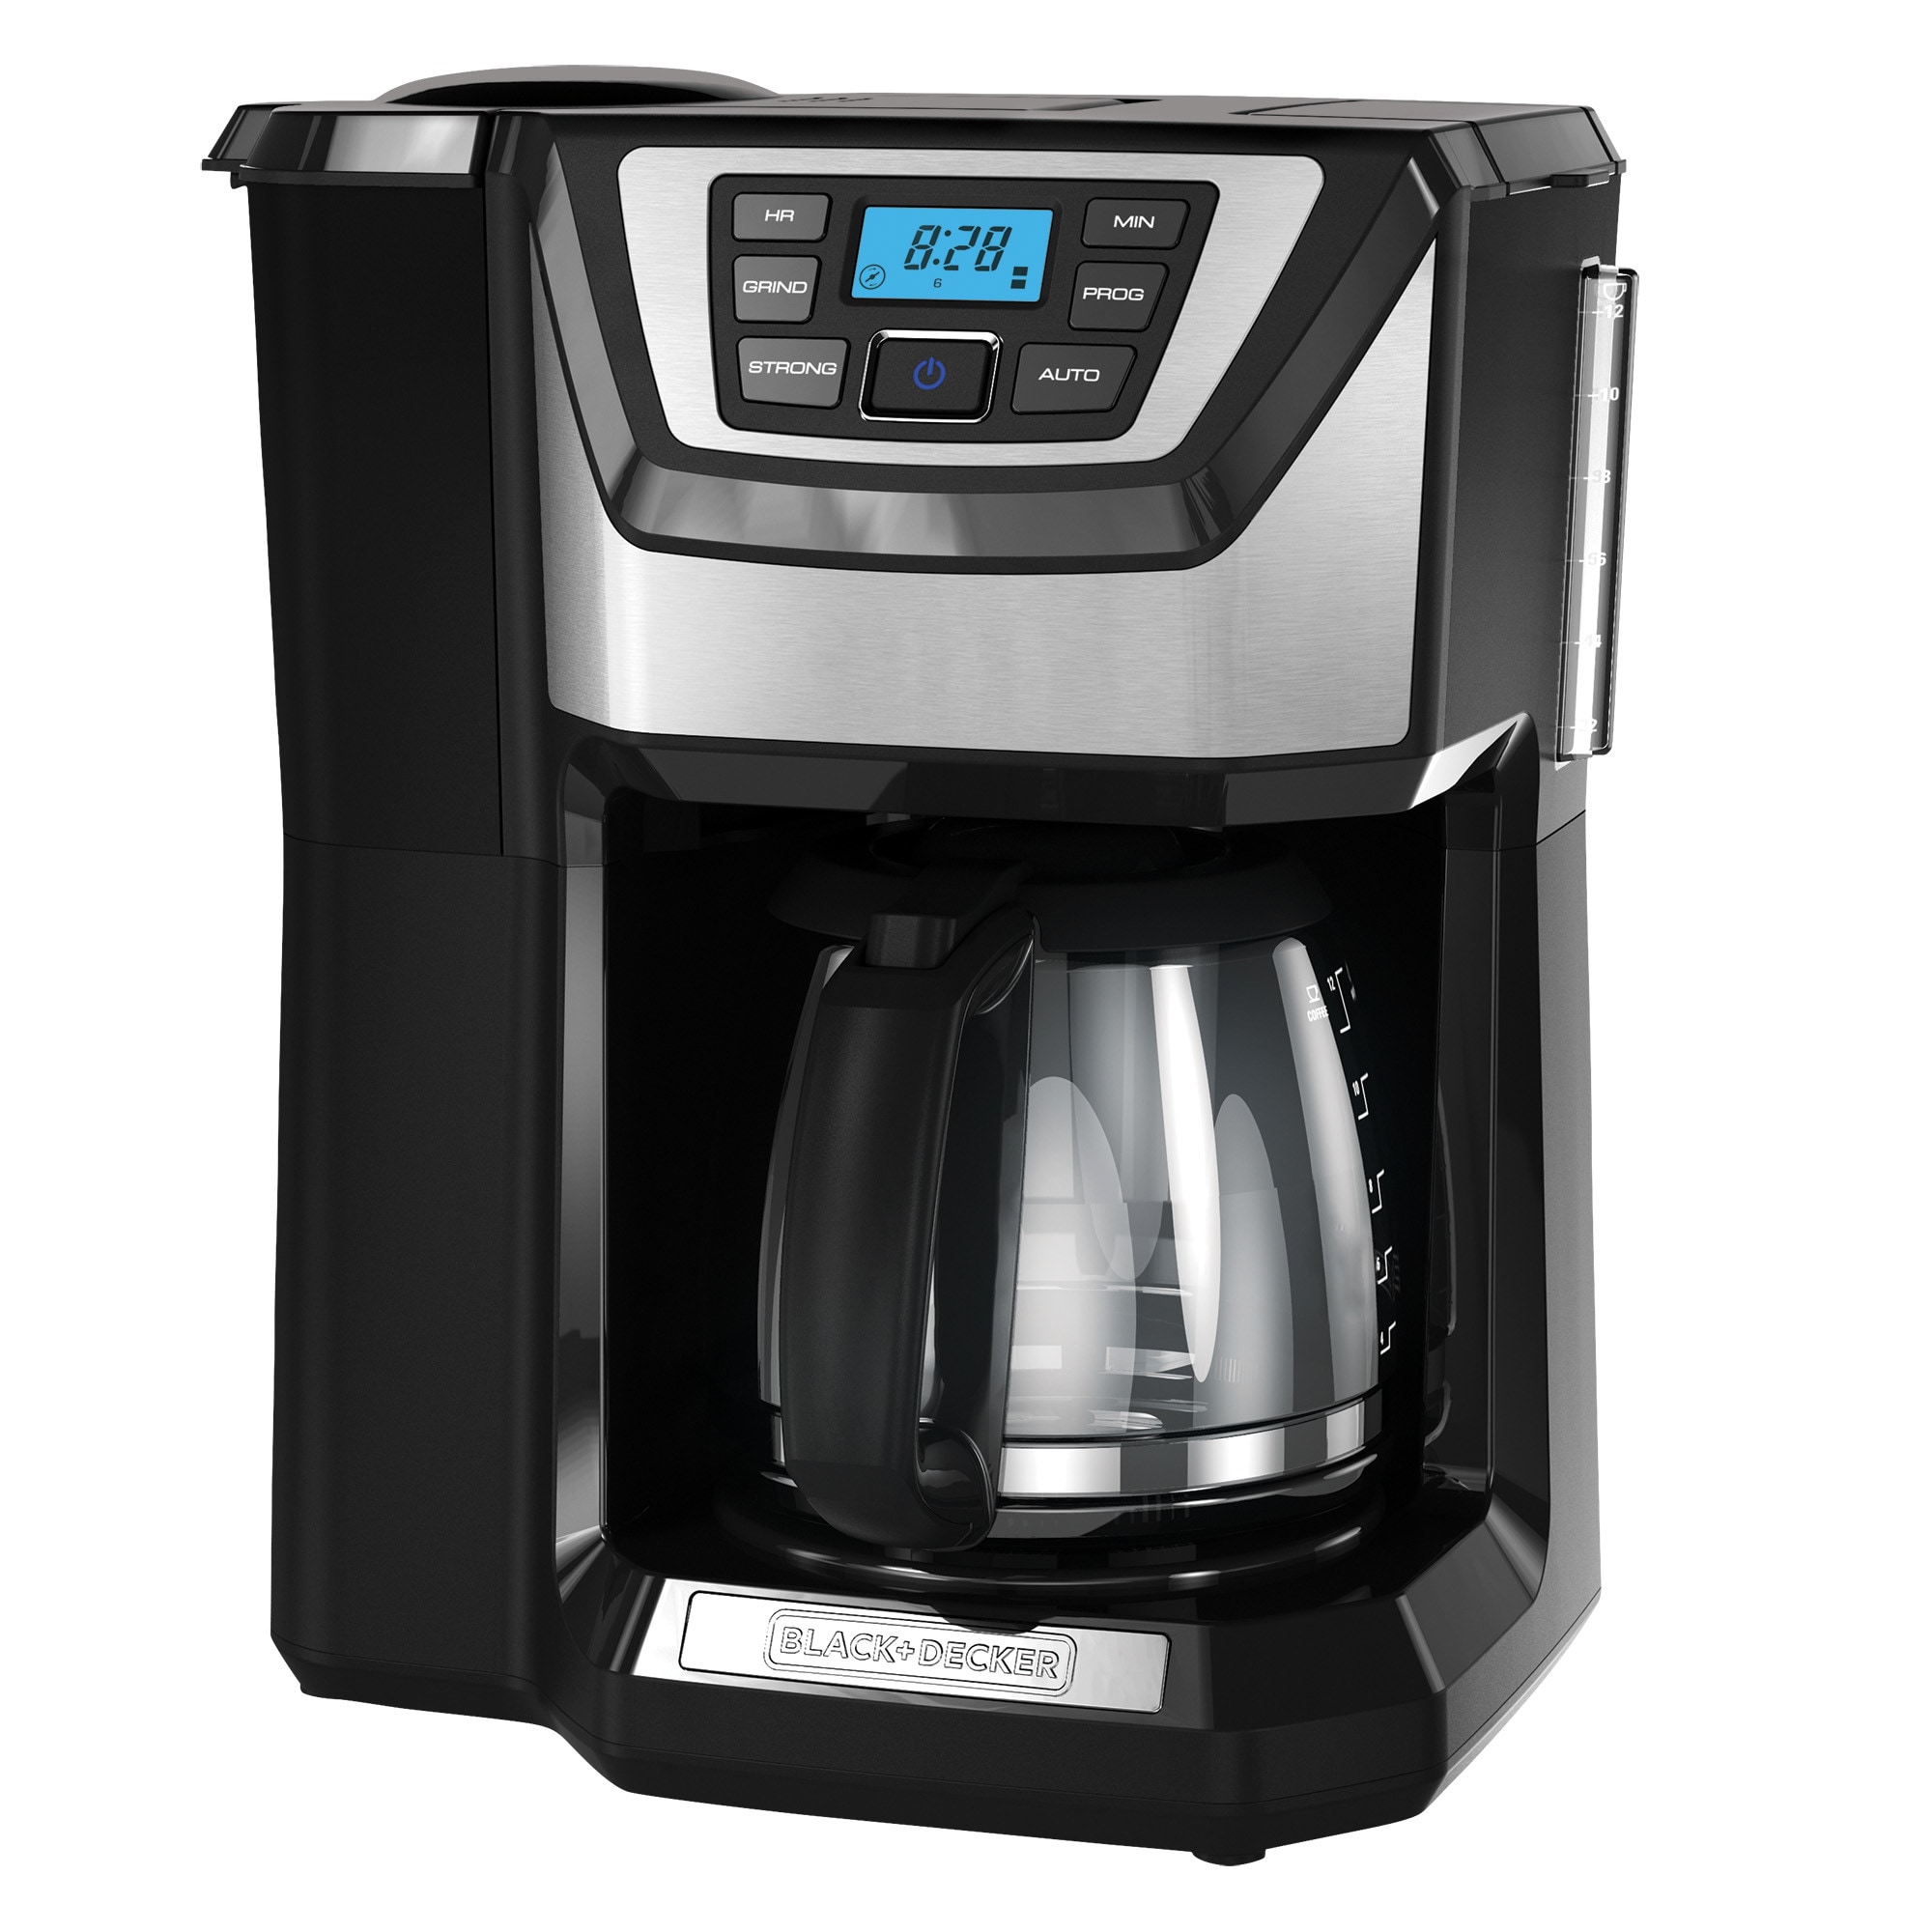 Black & Decker 12-Cup Programmable Coffeemaker Review 